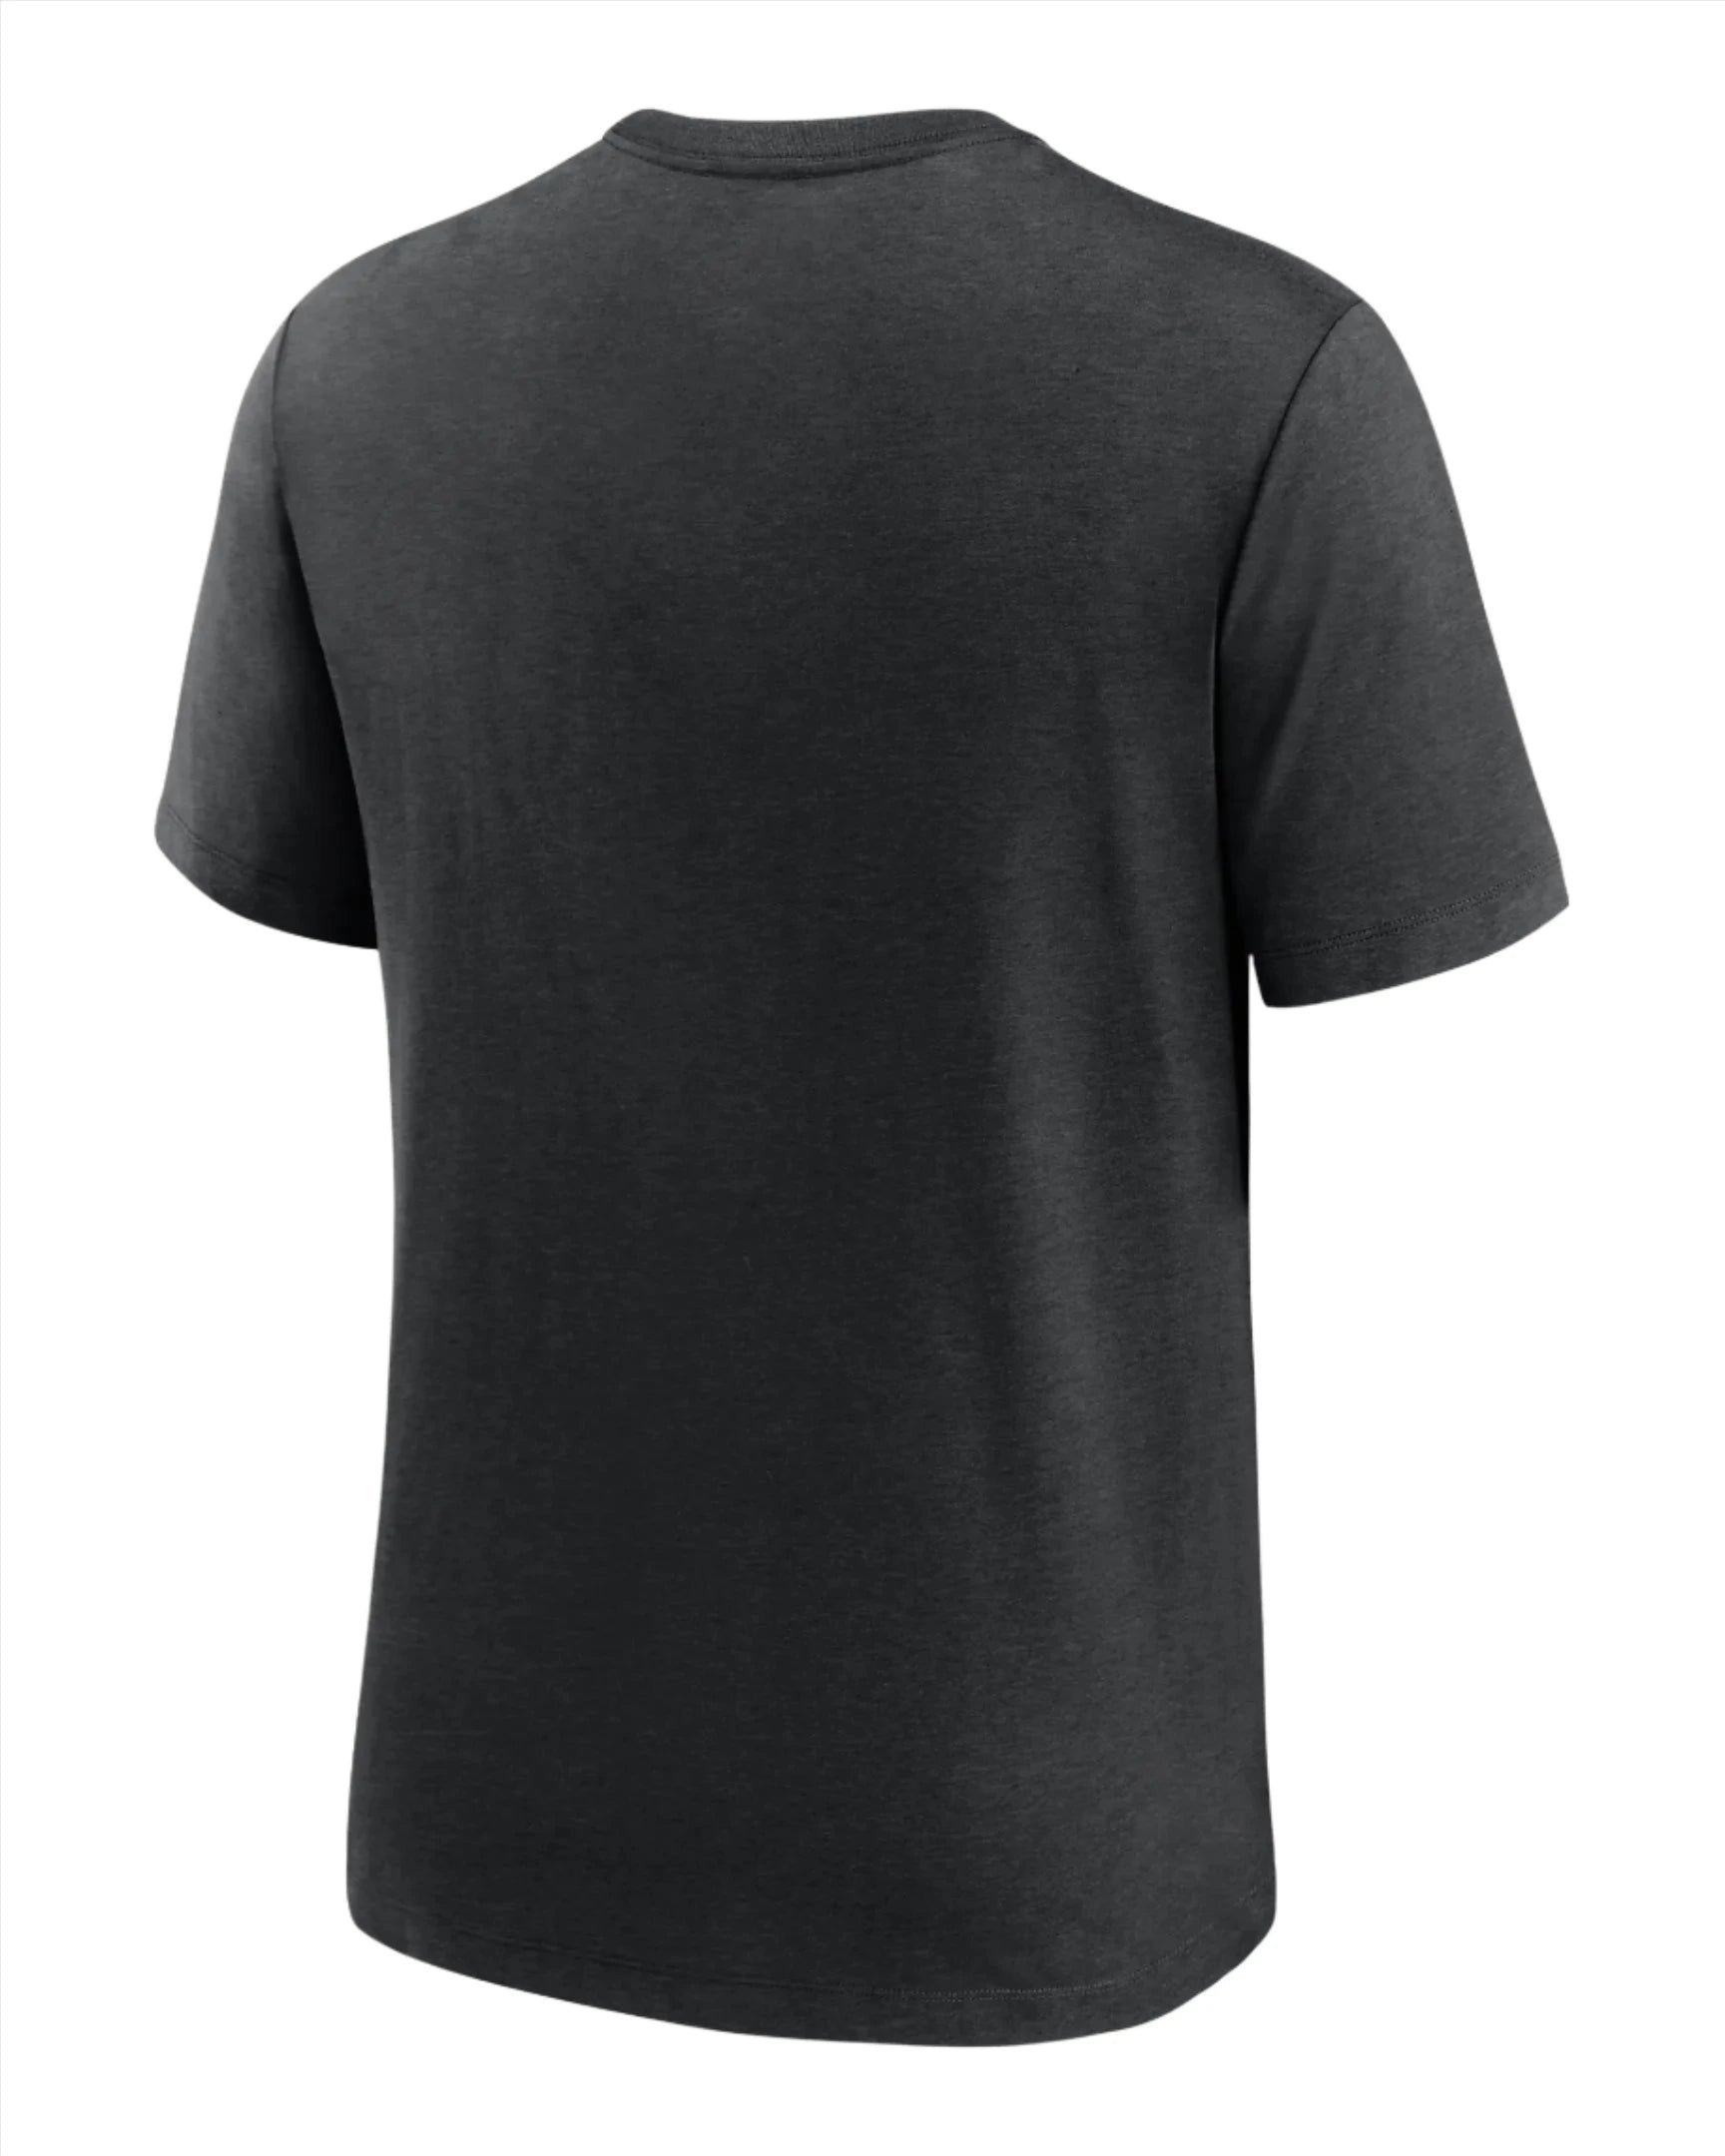 Nike San Francisco Giants Swing Big T-Shirts-Black Heather